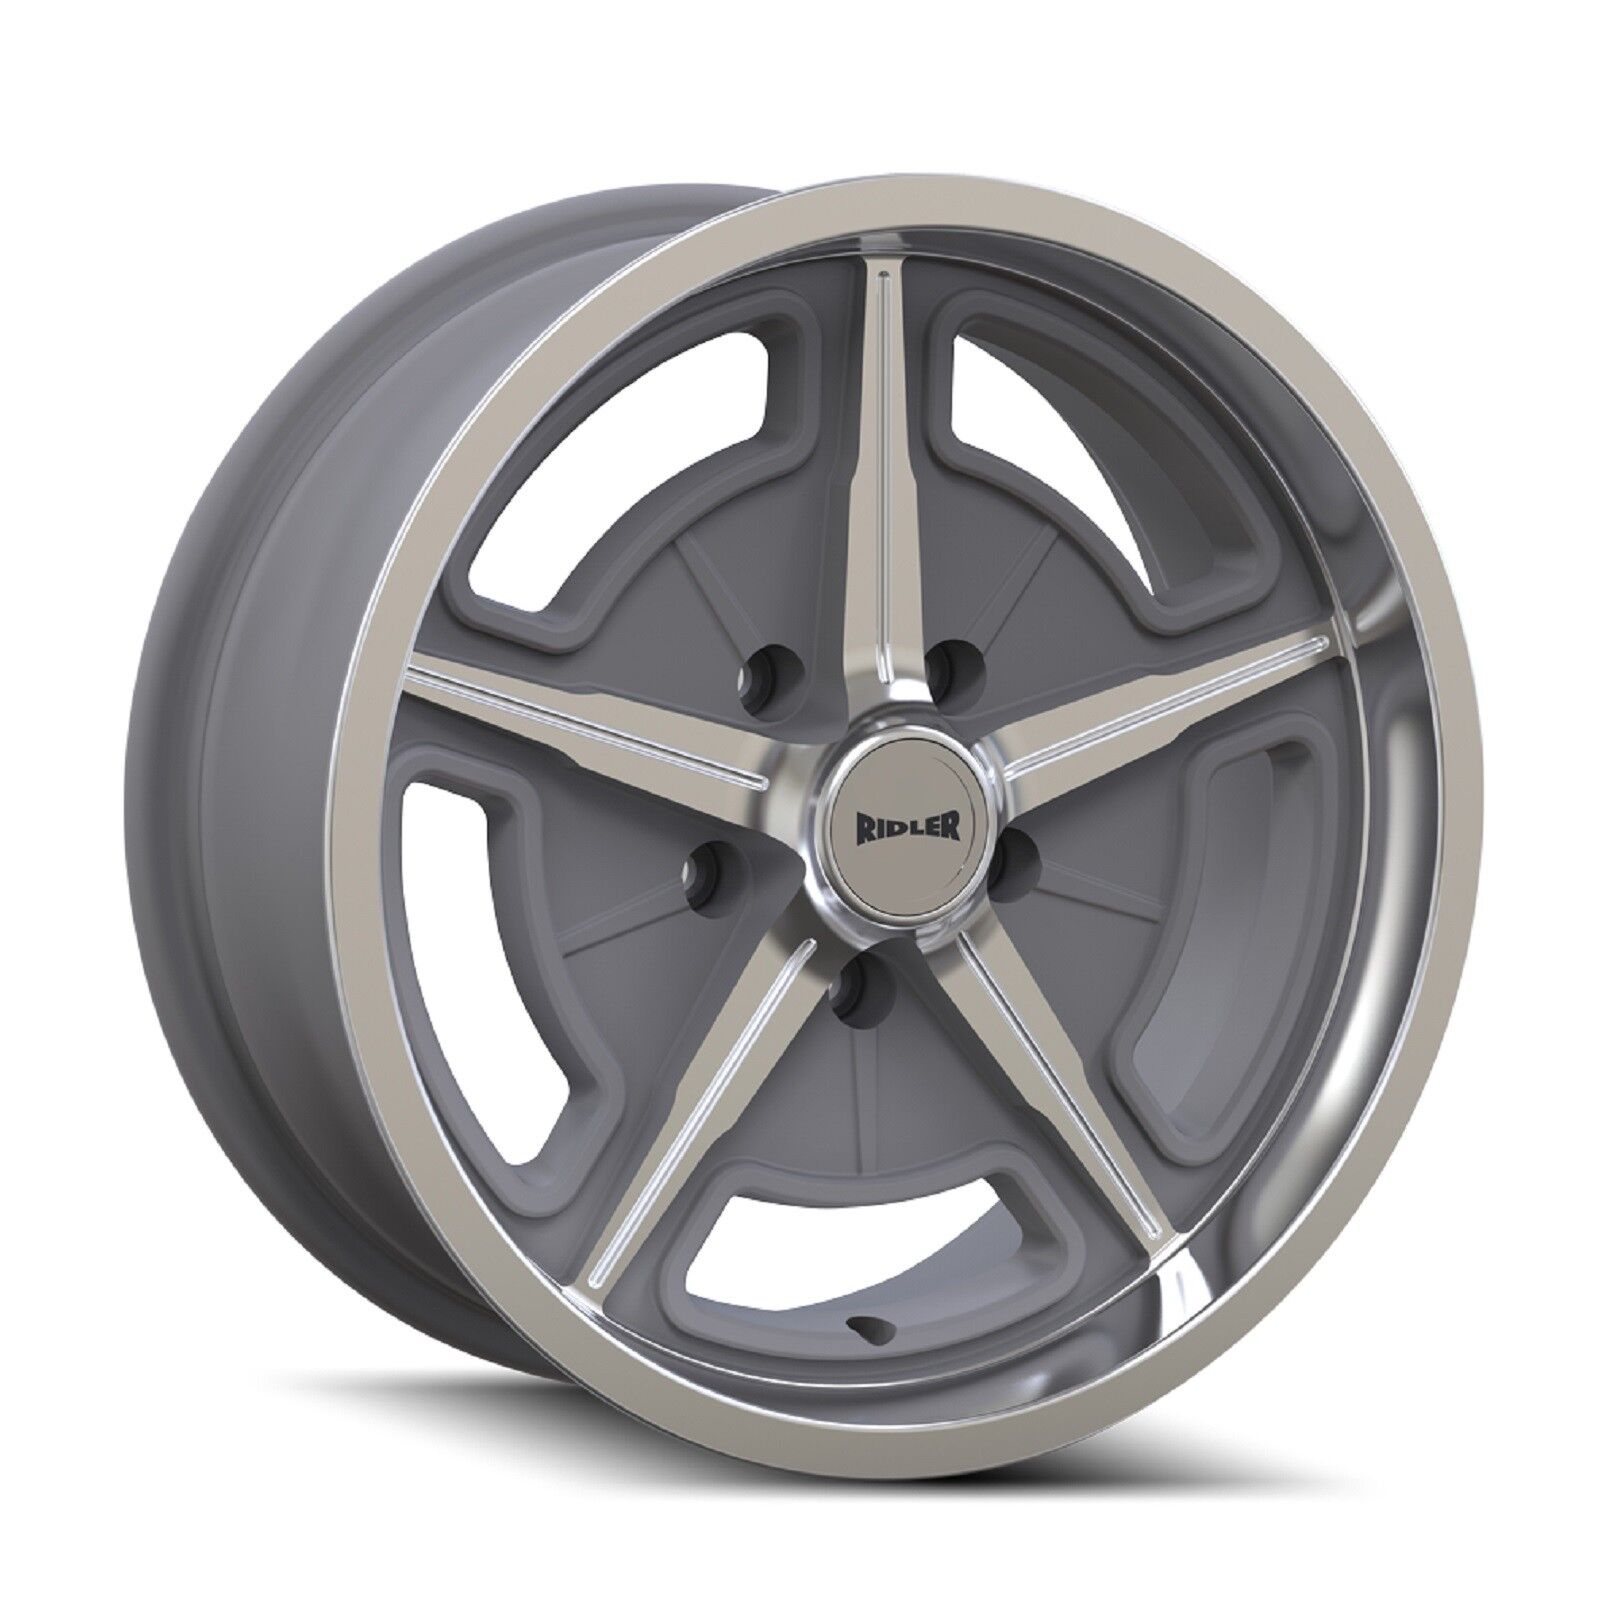 CPP Ridler 605 wheels 18x9.5 fits: FORD RANCHERO RANGER TORINO